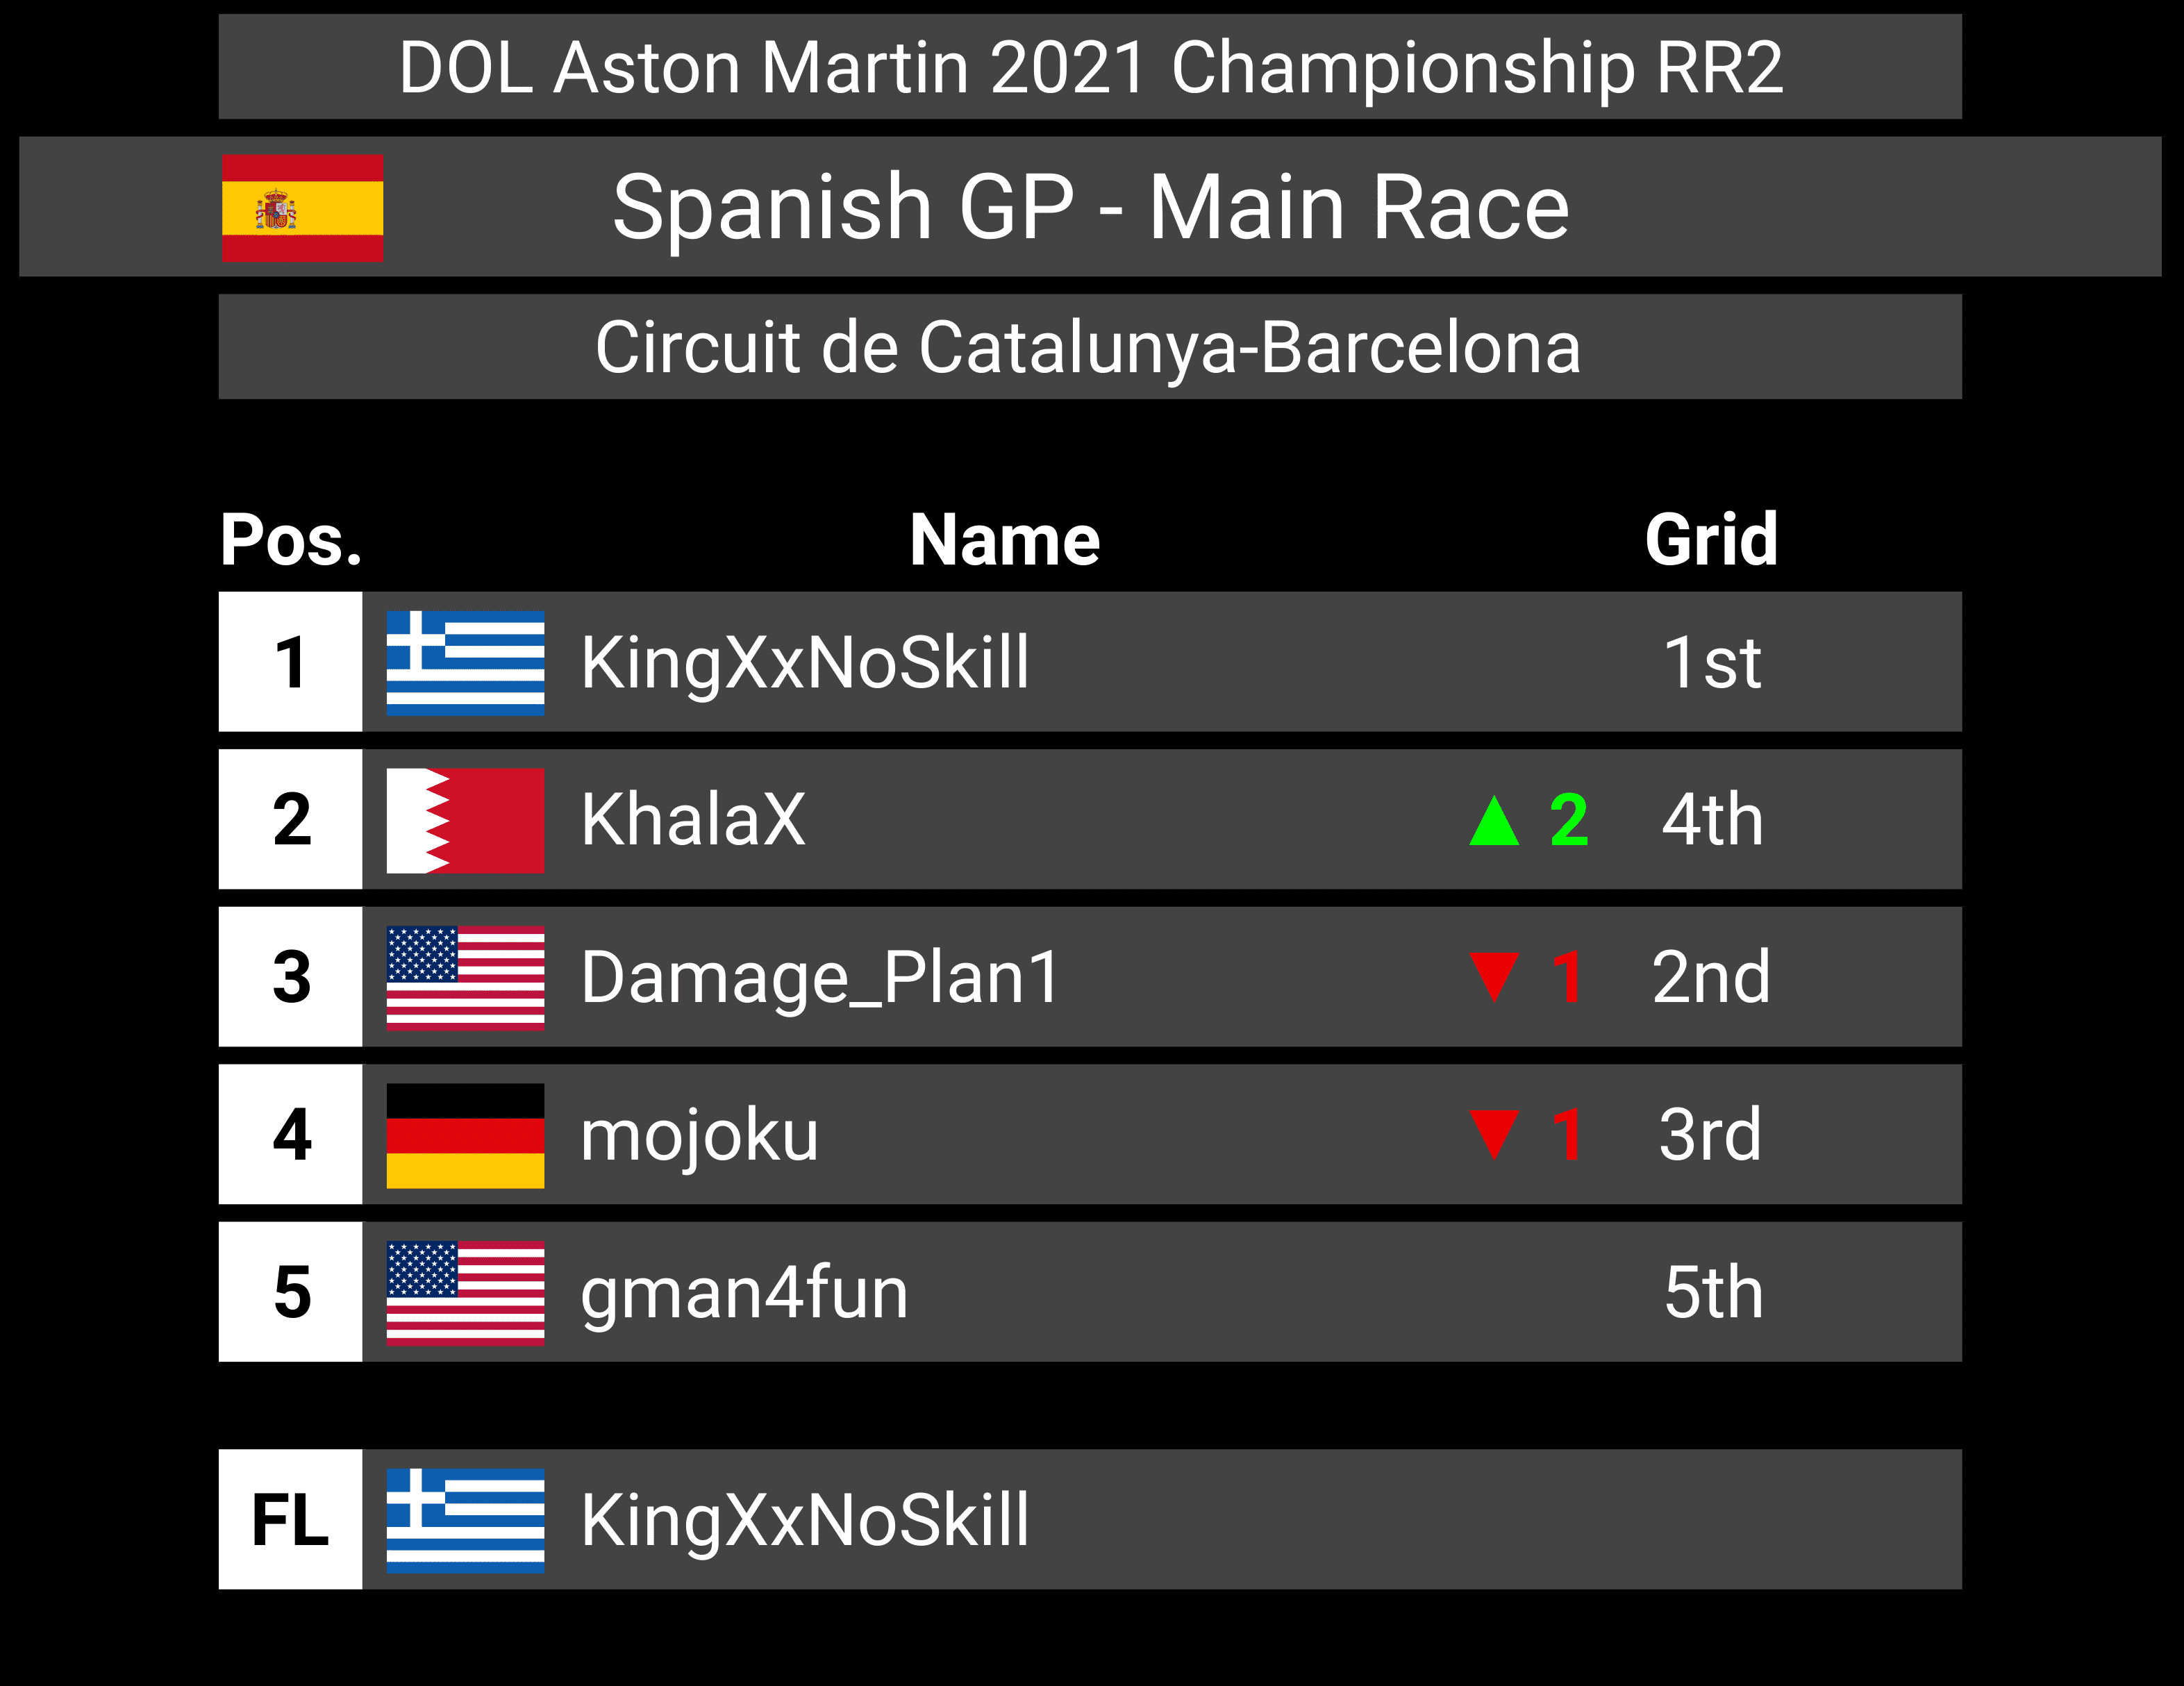 dol-aston-martin-2021-championship-spanish-gp-2.png